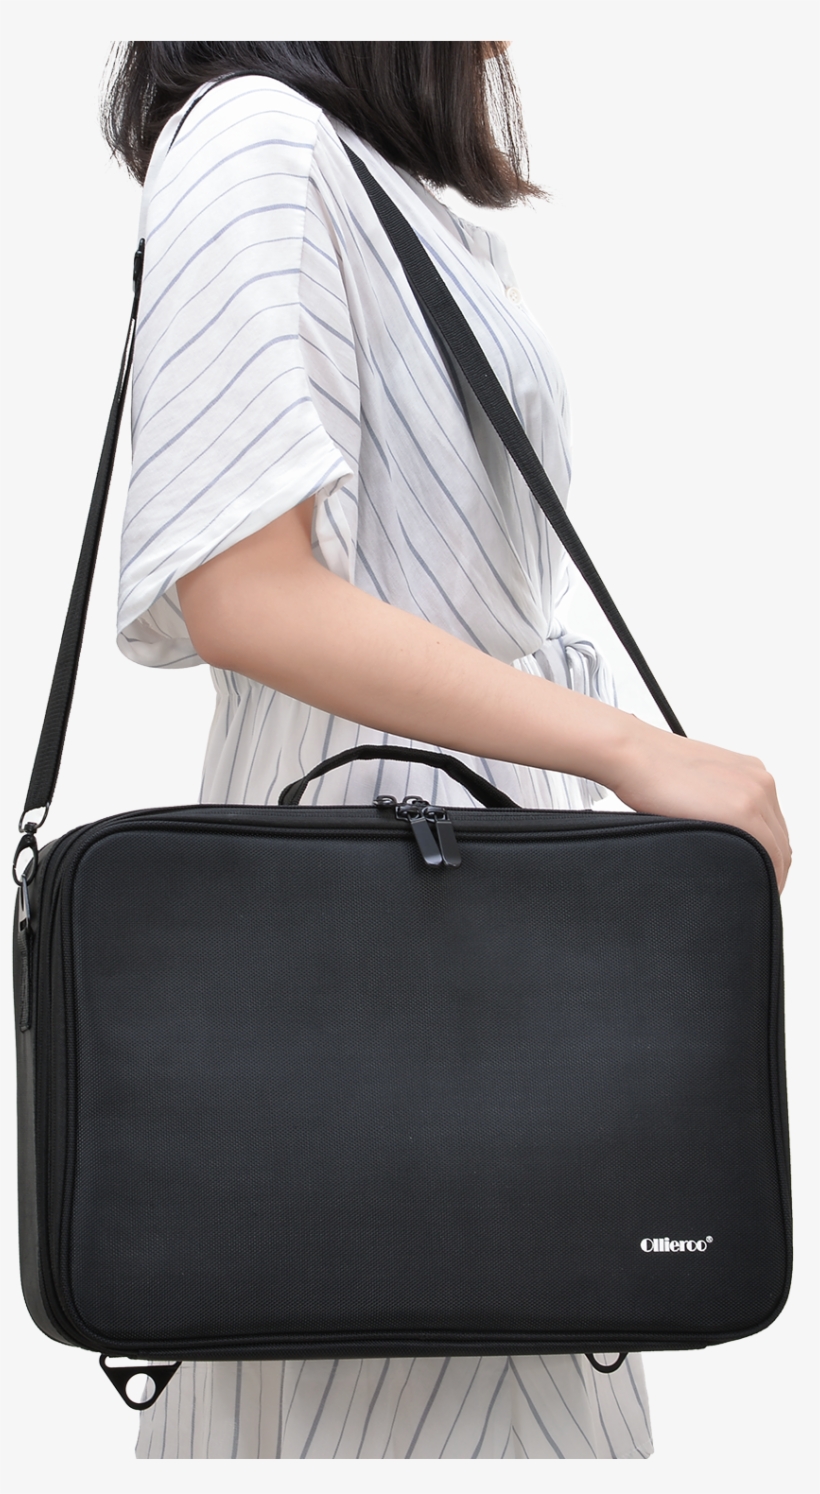 Allieroo Makeup Professional Case 3-tiers - Shoulder Bag, transparent png #1283408